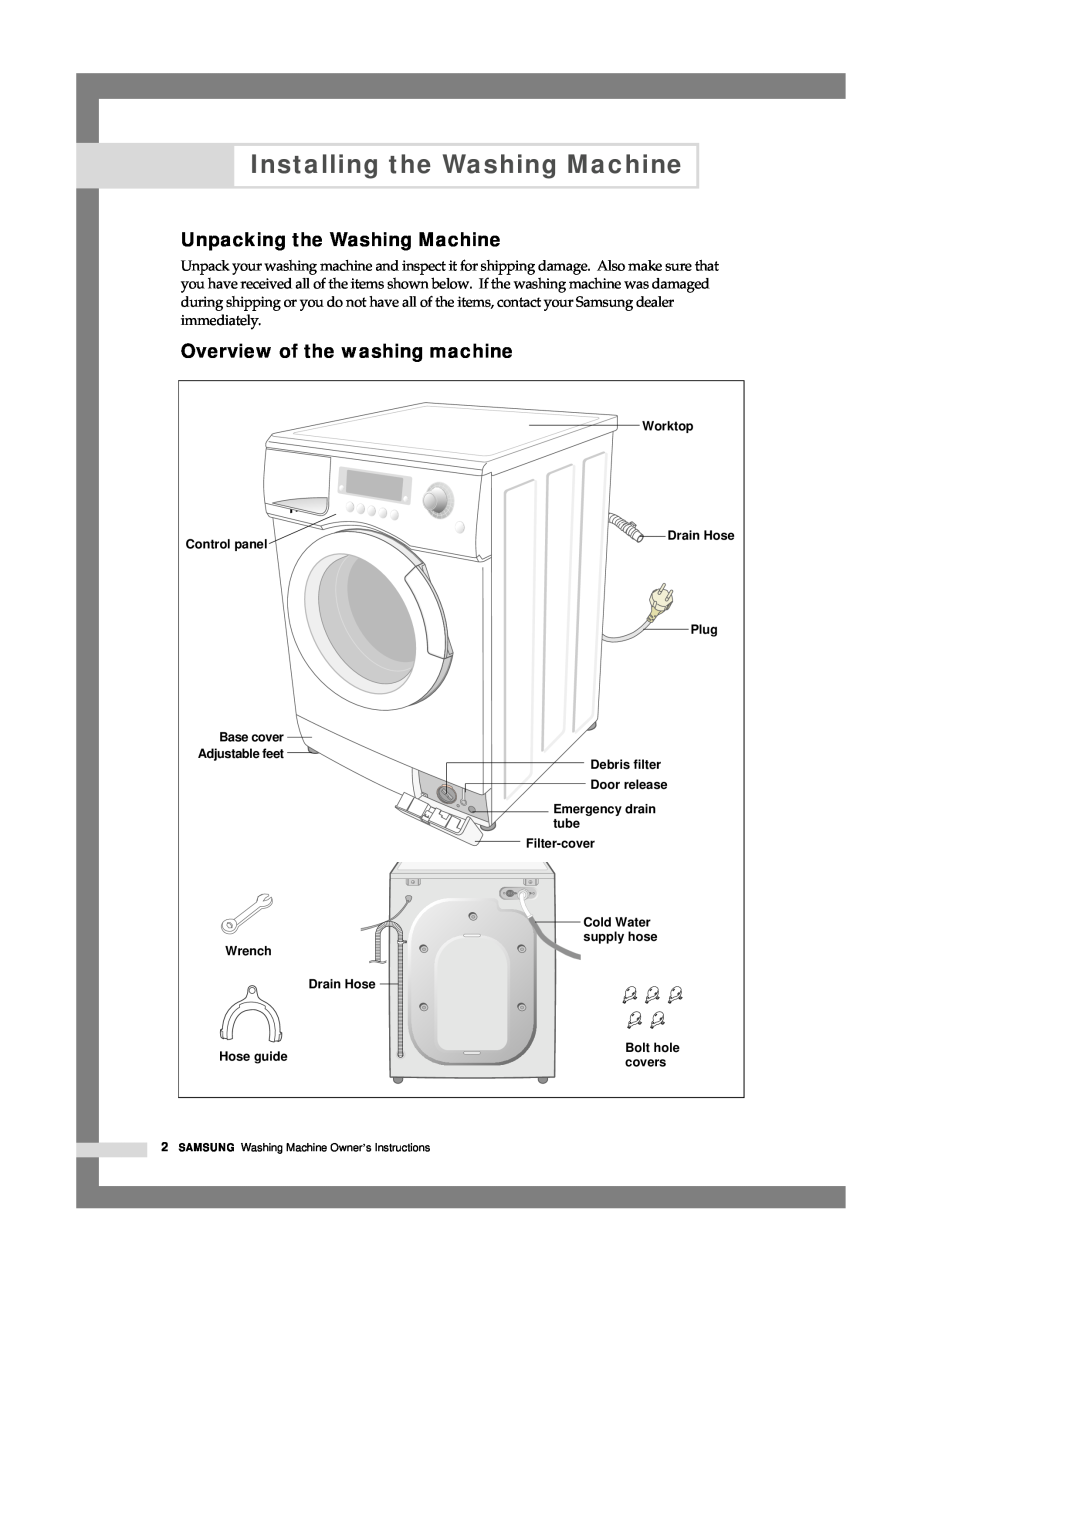 Samsung Q1435VGW1-XEE manual Installing the Washing Machine, Unpacking the Washing Machine, Overview of the washing machine 